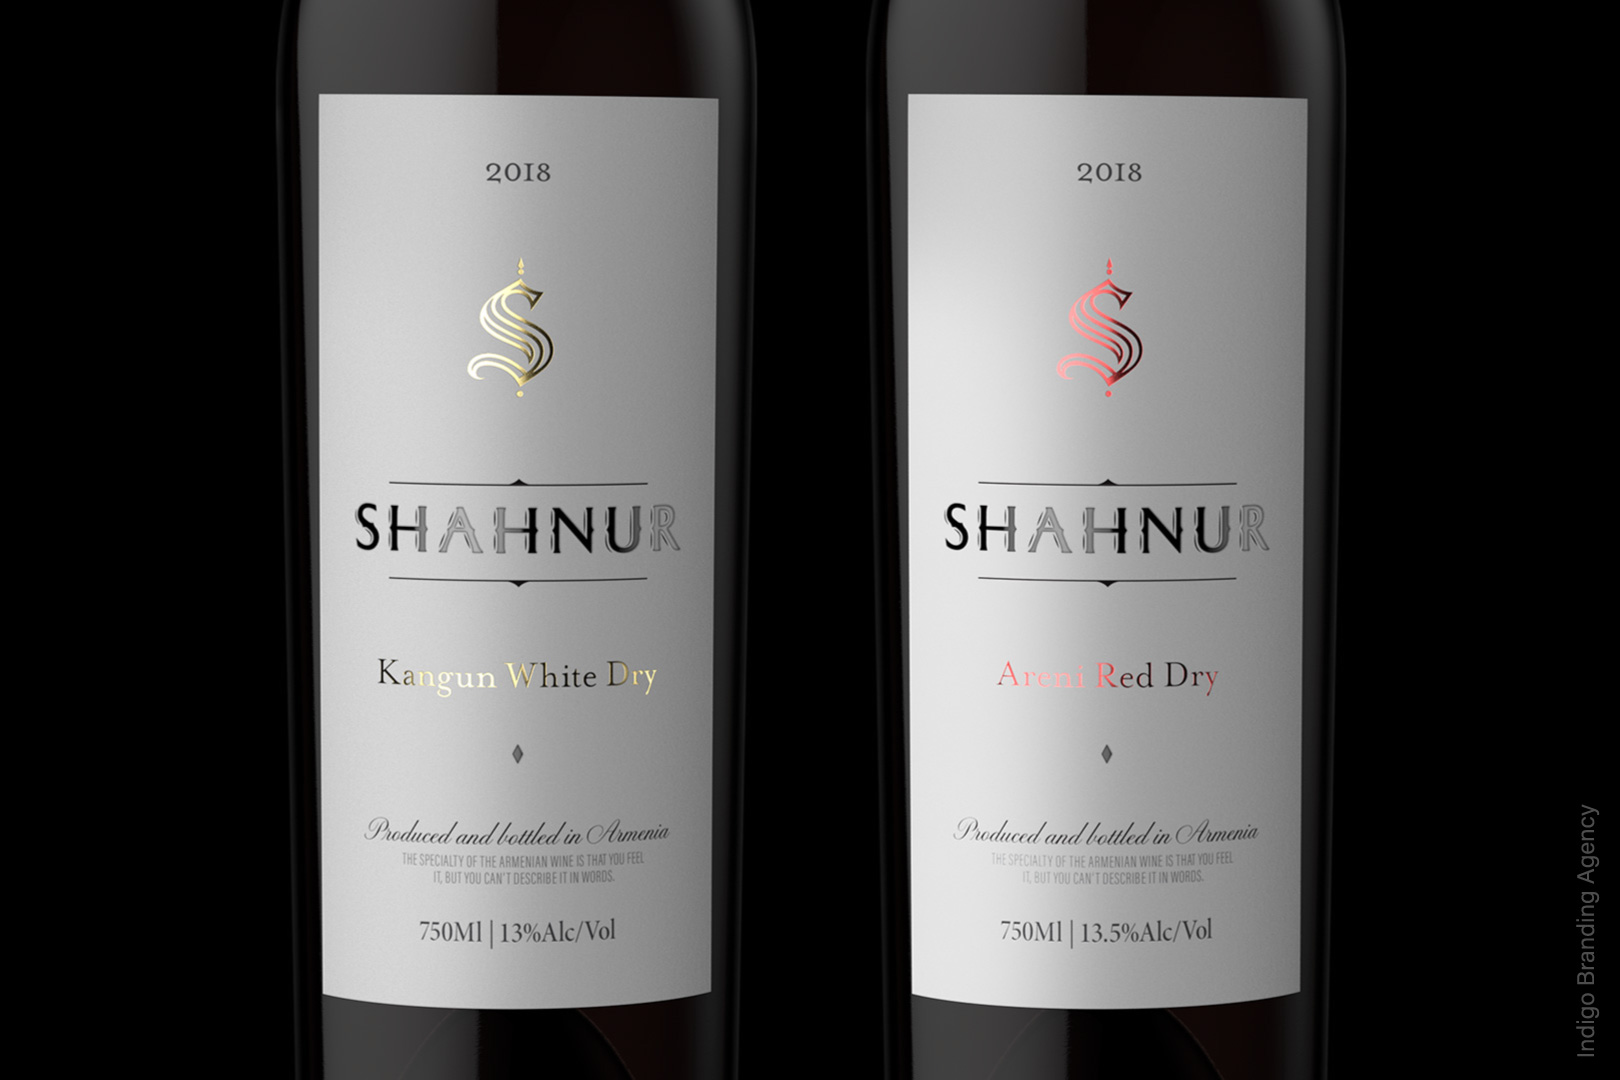 Shahnur branding and labeling design by Indigo branding